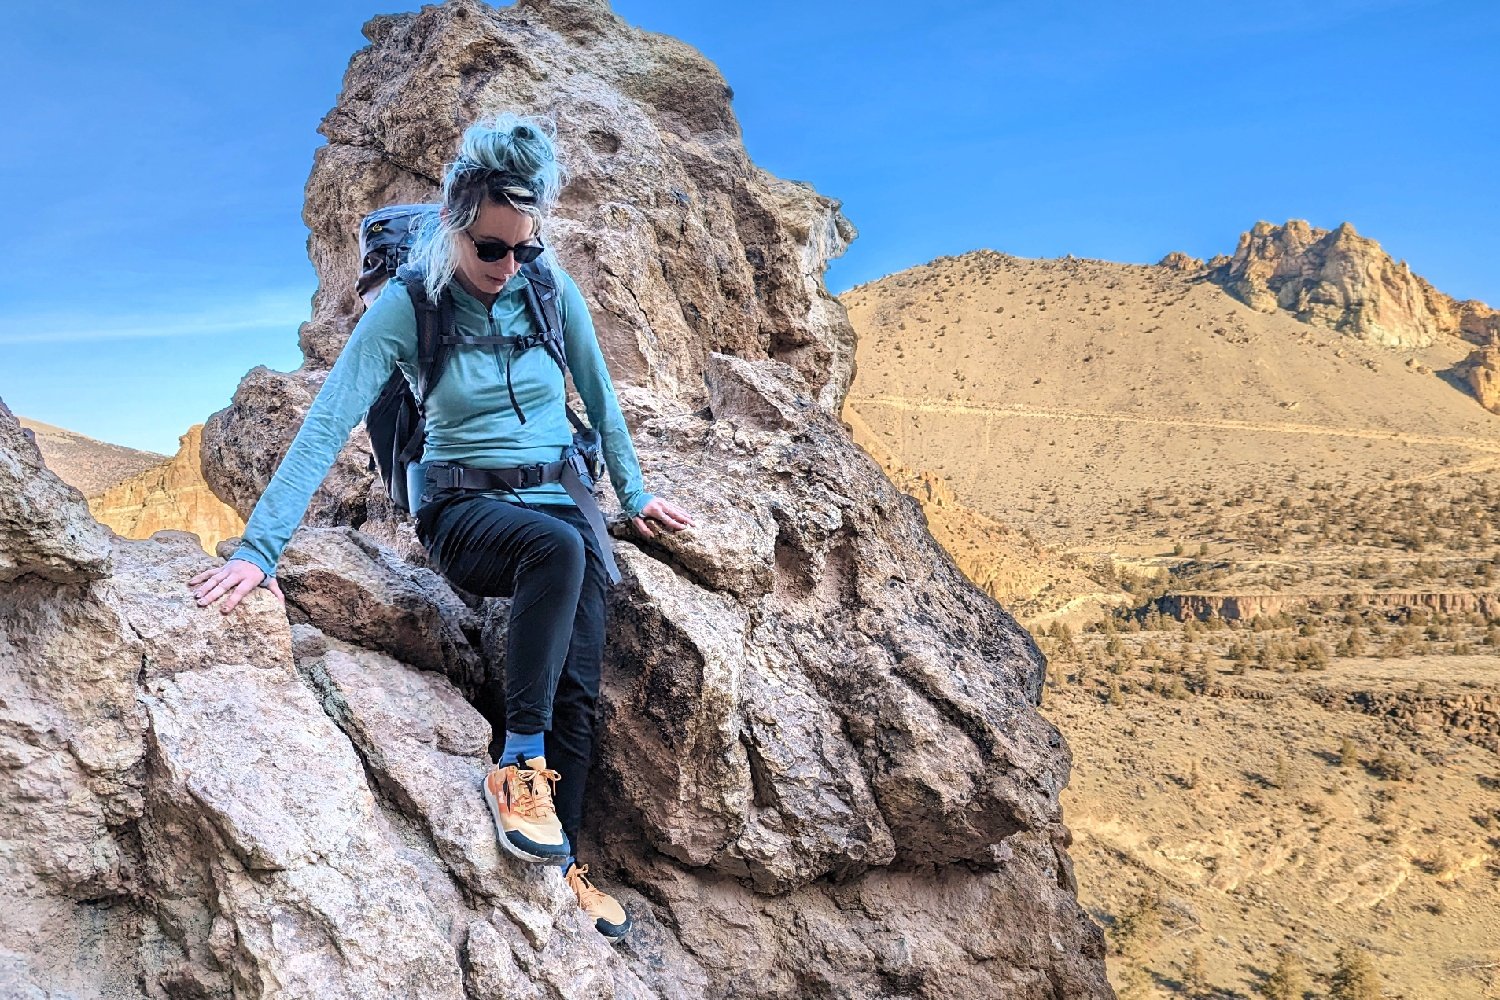 A hiker climbing down some rocks in a desert landscape wearing the REI Midweight Half Zip Base Layer